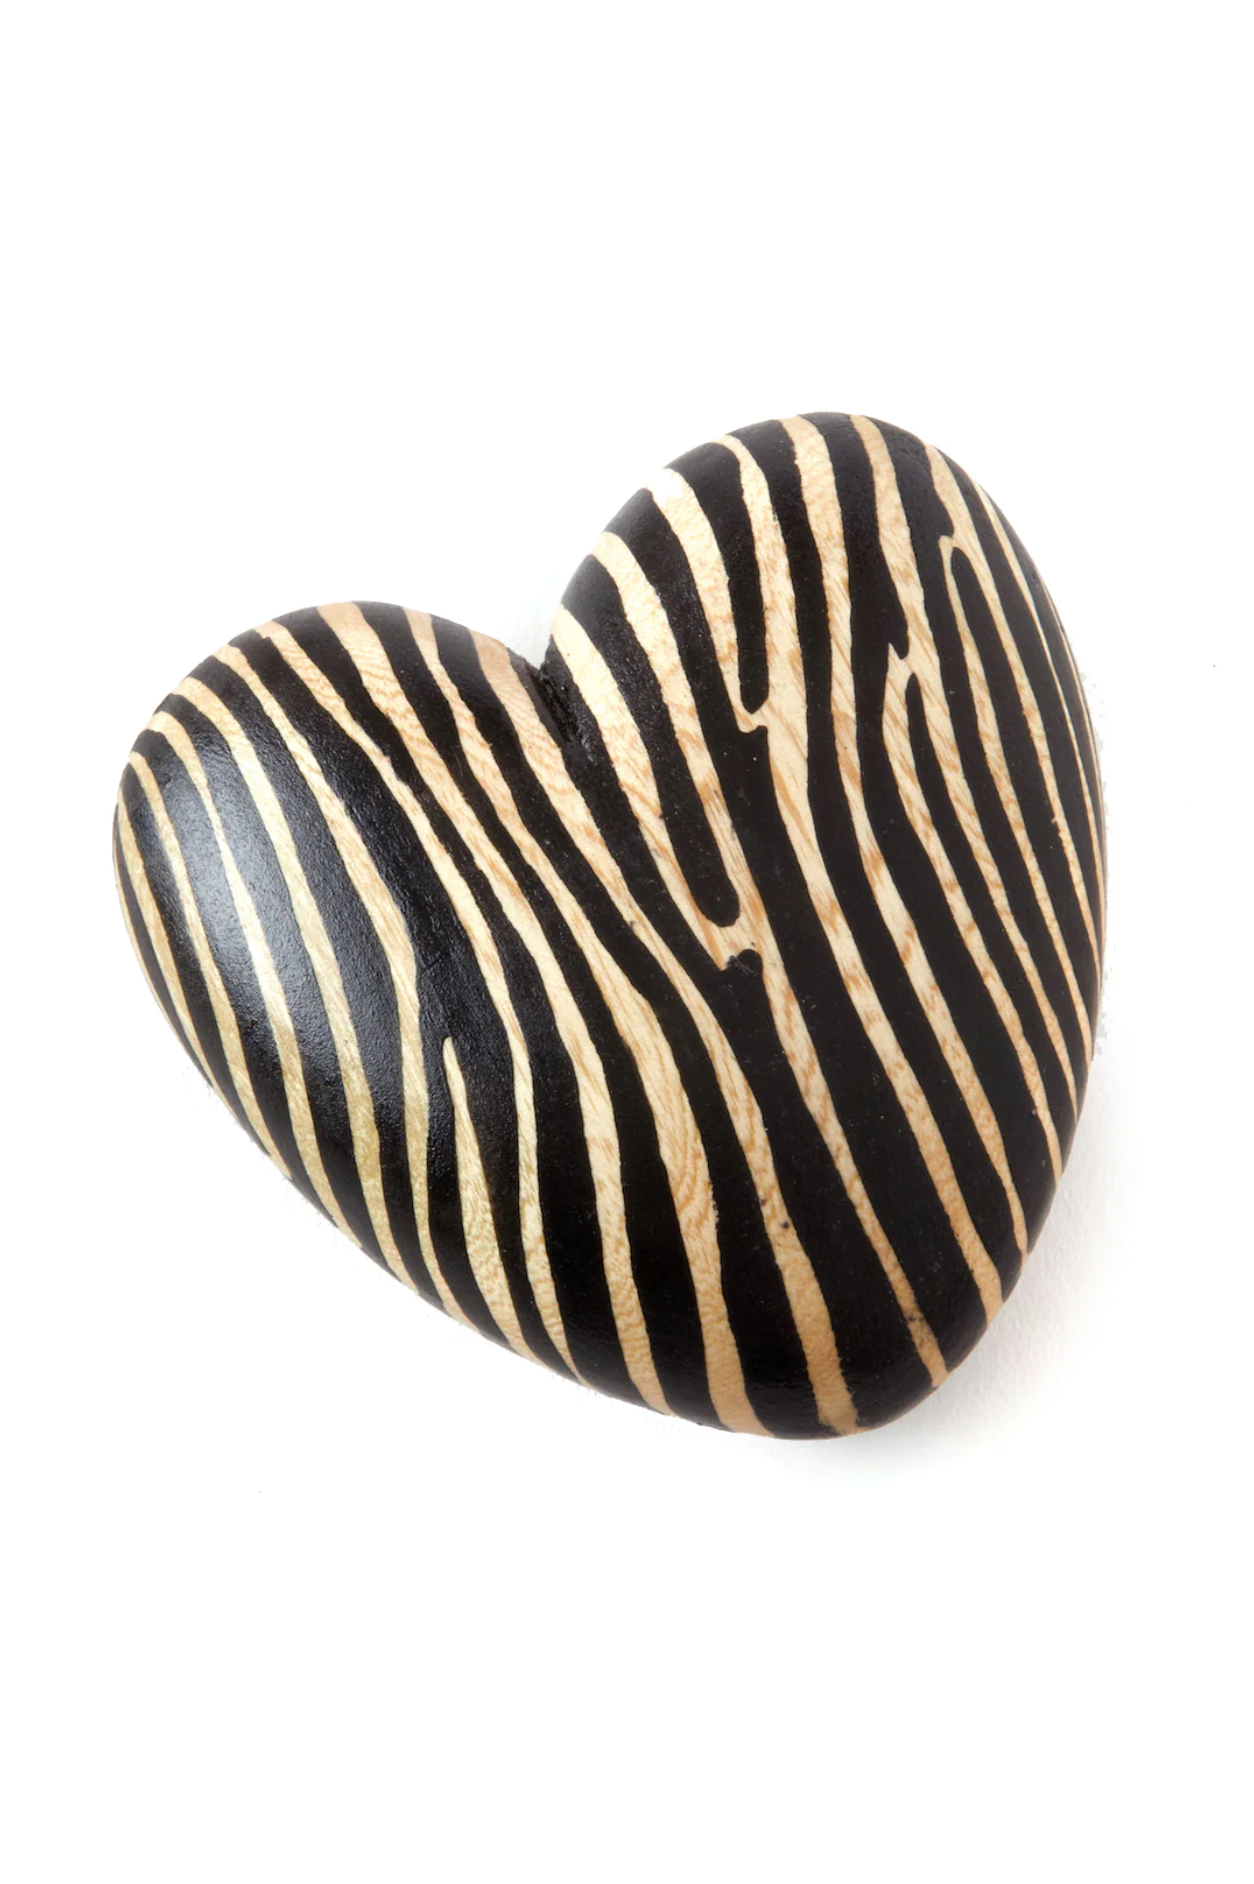 Jacaranda Wood Zebra Print Heart